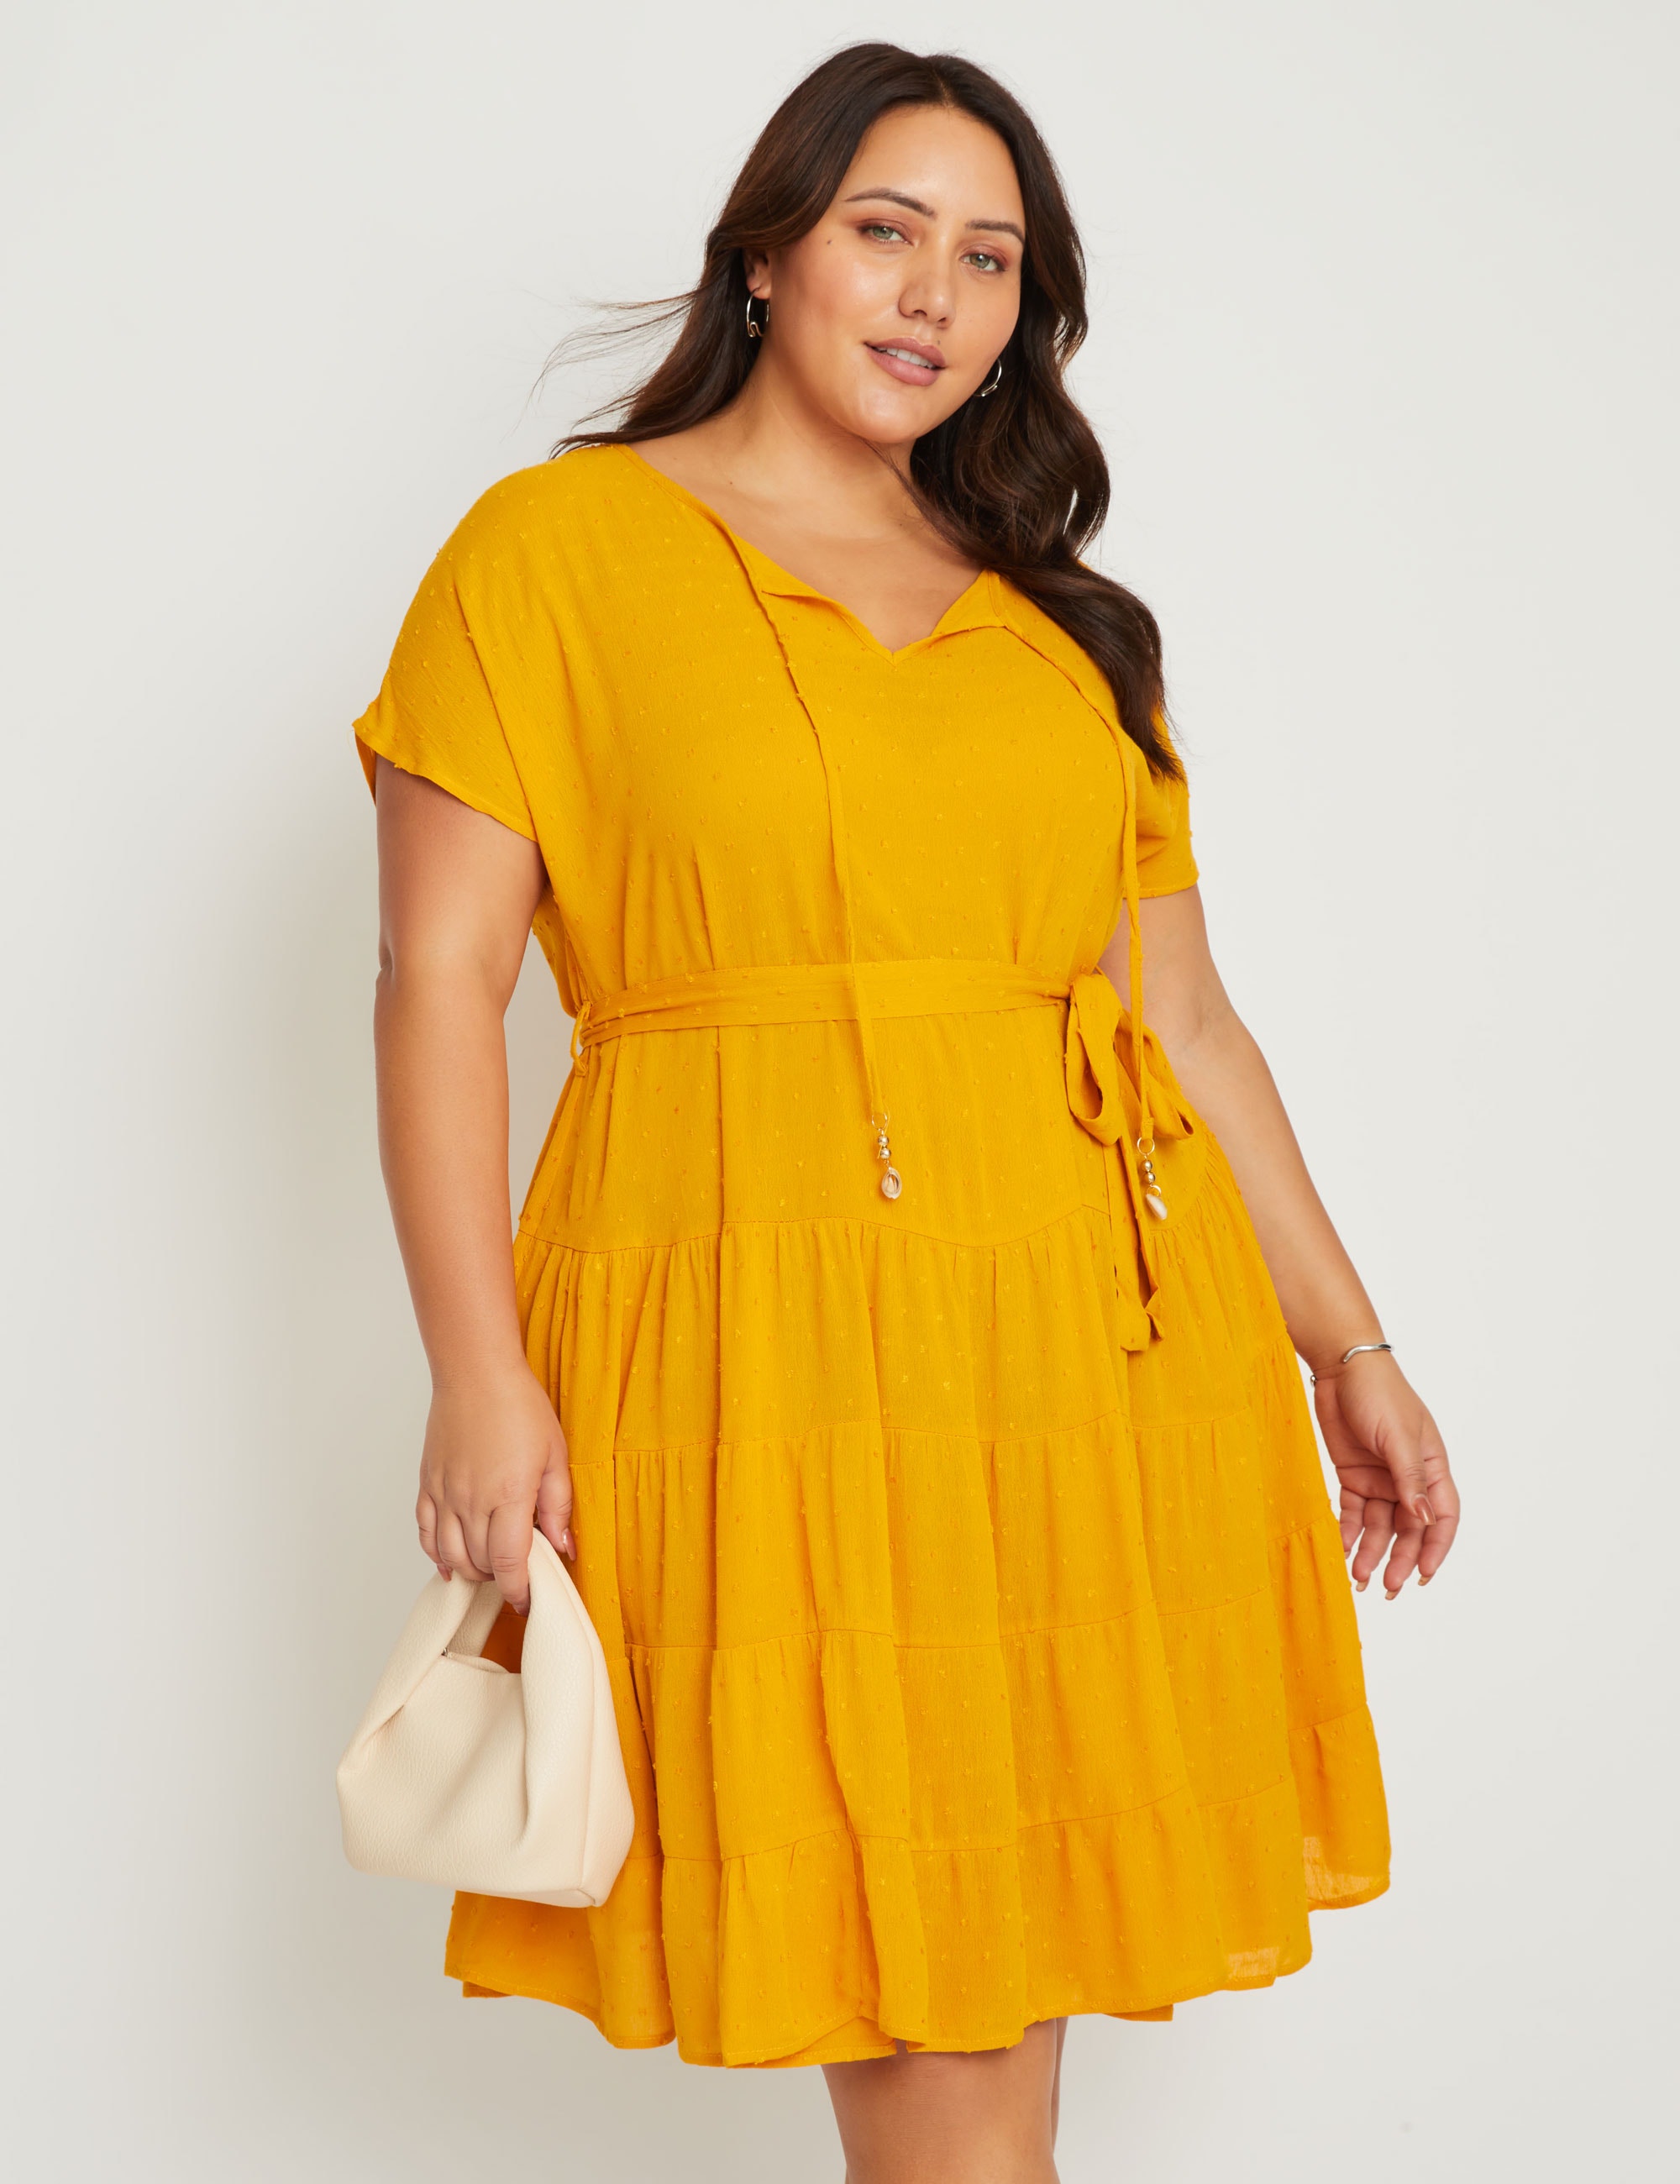 BeMe - Plus Size - Womens Midi Dress - Yellow Summer Casual Beach